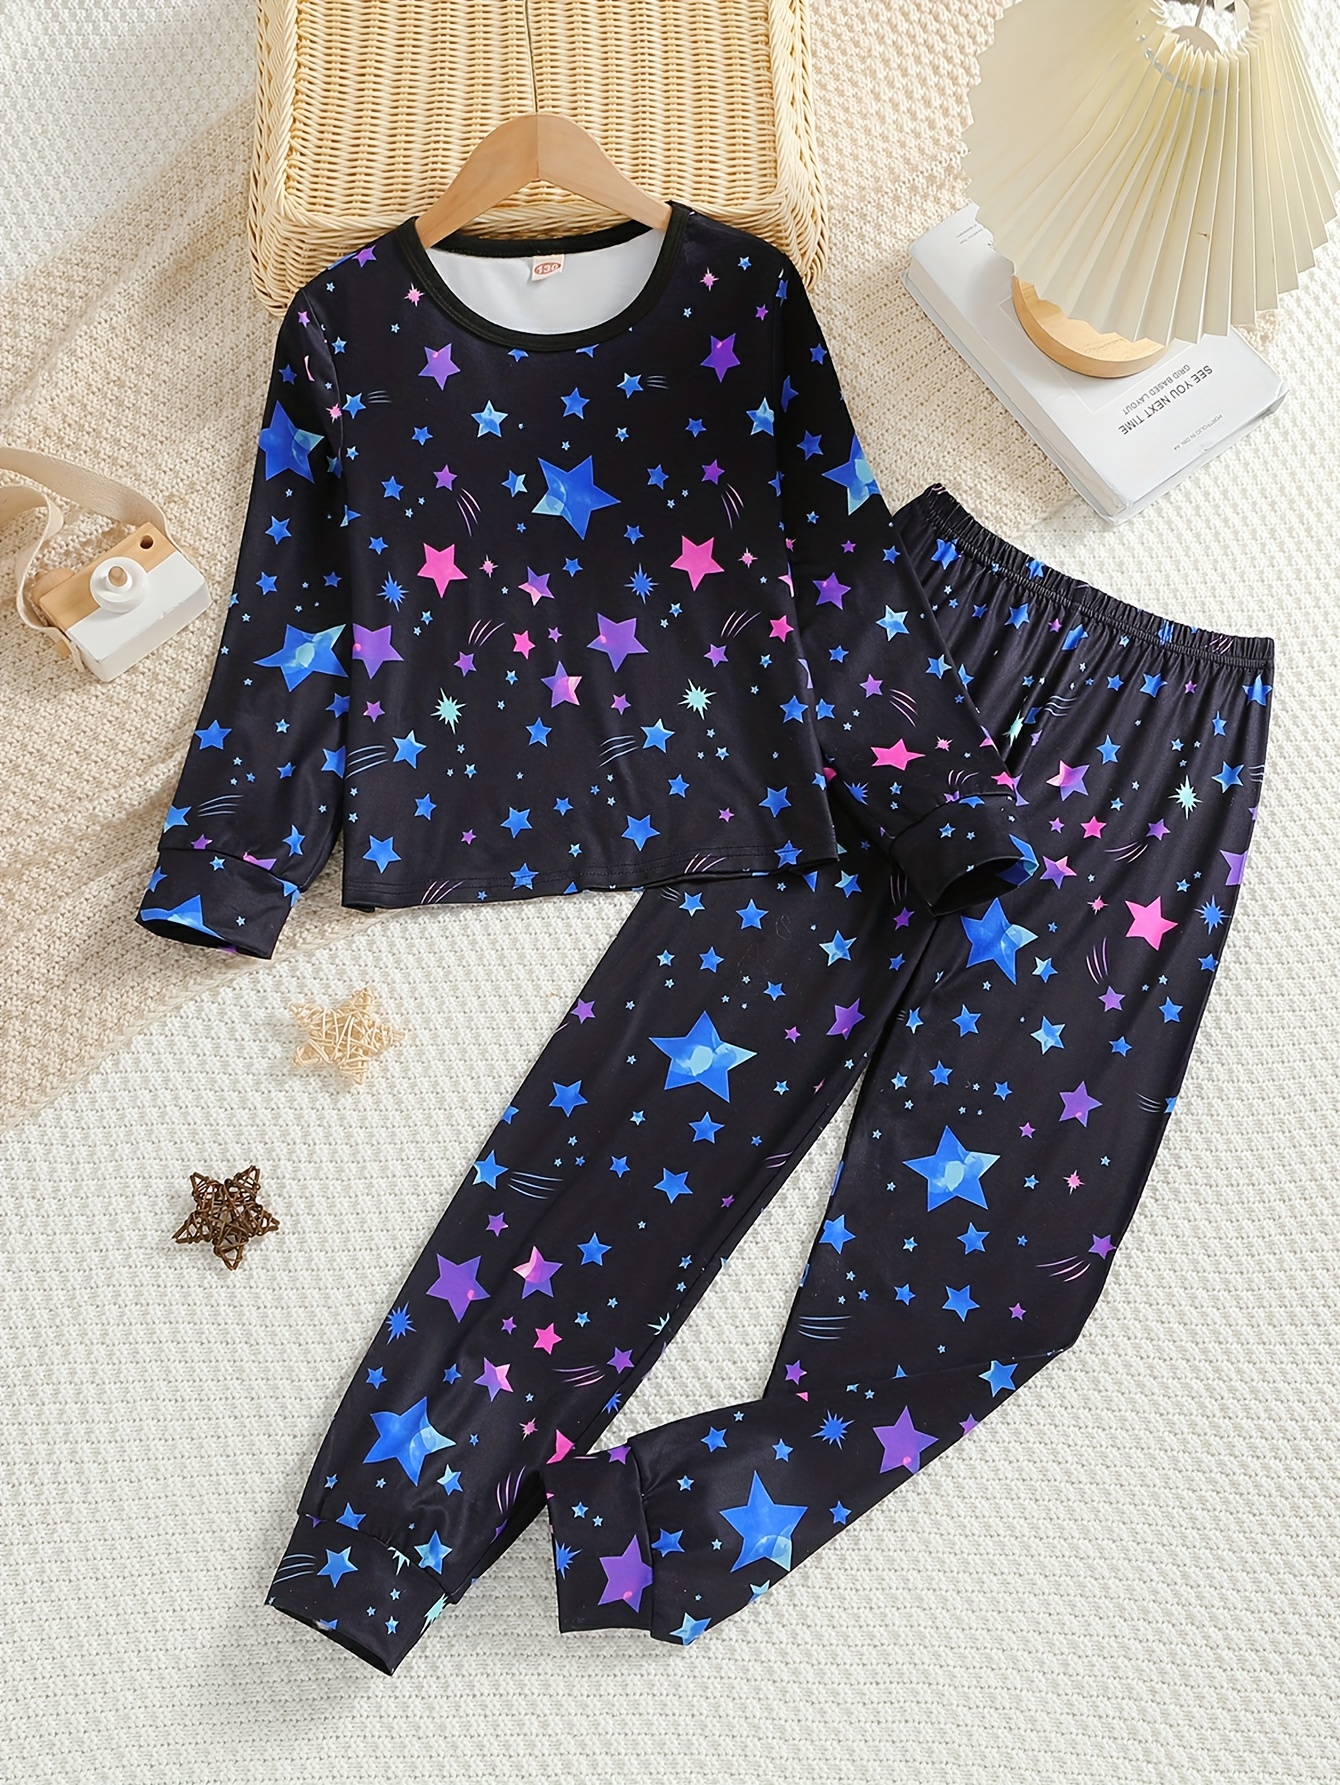 Stars Above Tie Pajama Pants for Women